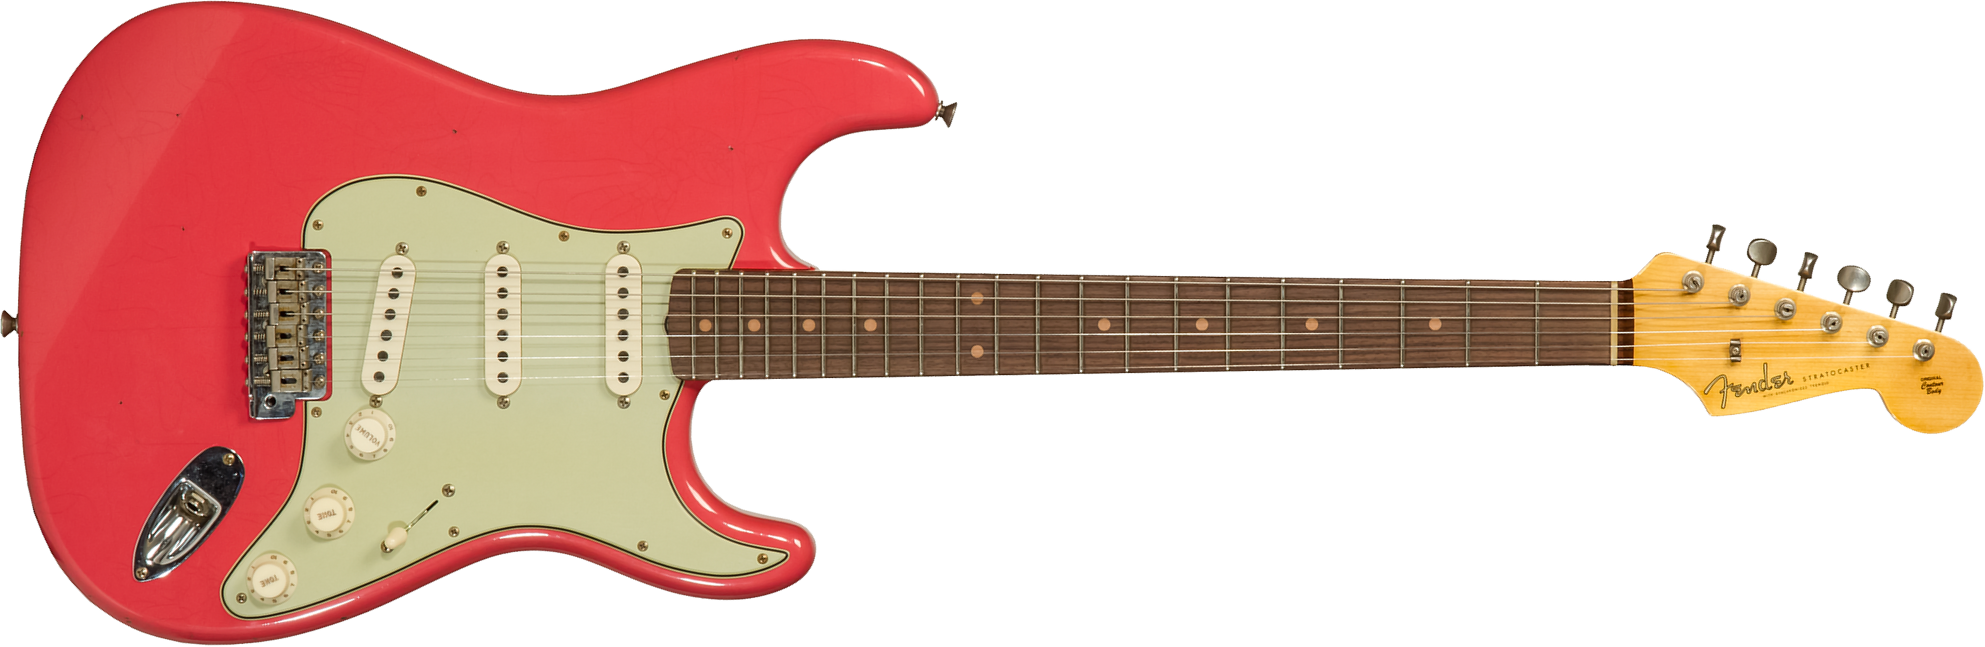 Fender Custom Shop Strat 1959 3s Trem Rw #cz569772 - Journeyman Relic Aged Fiesta Red - Str shape electric guitar - Main picture